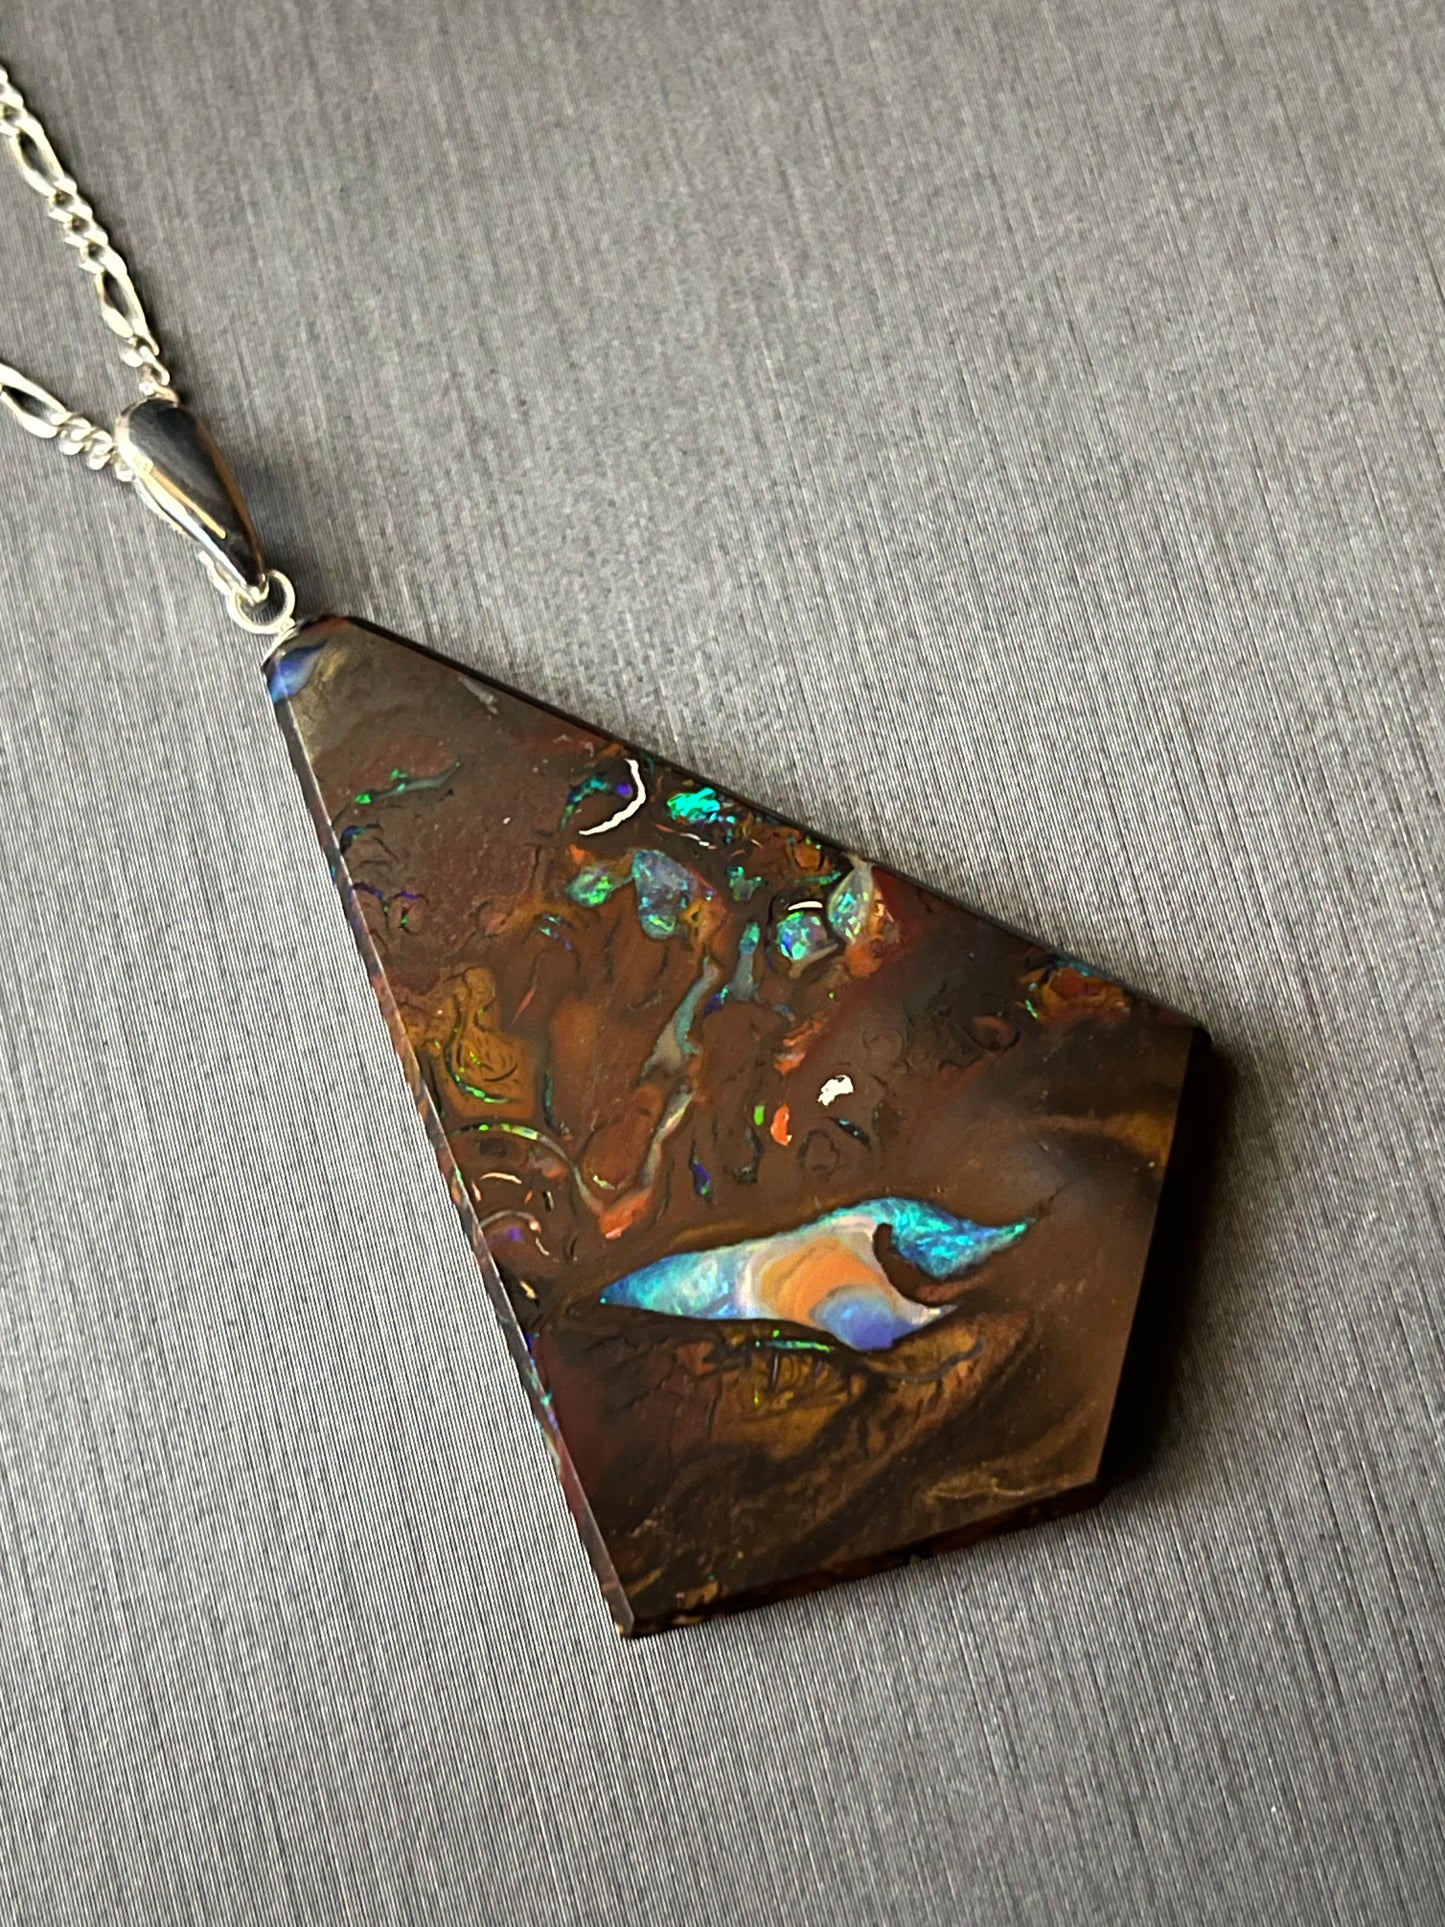 Australian Korite Opal Pendant